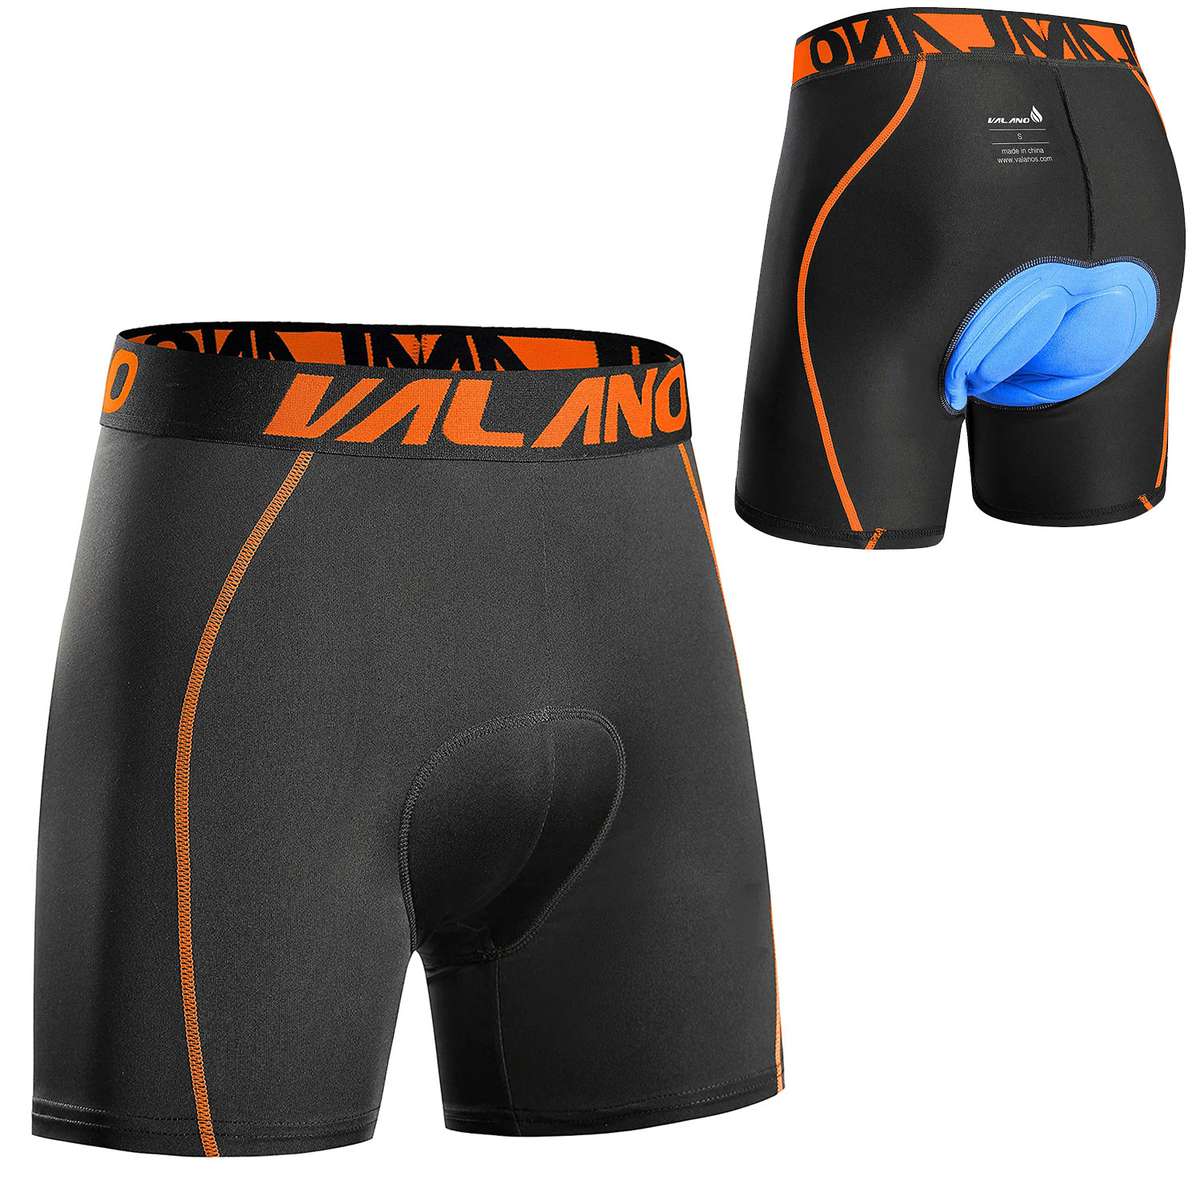 valano bike shorts orange